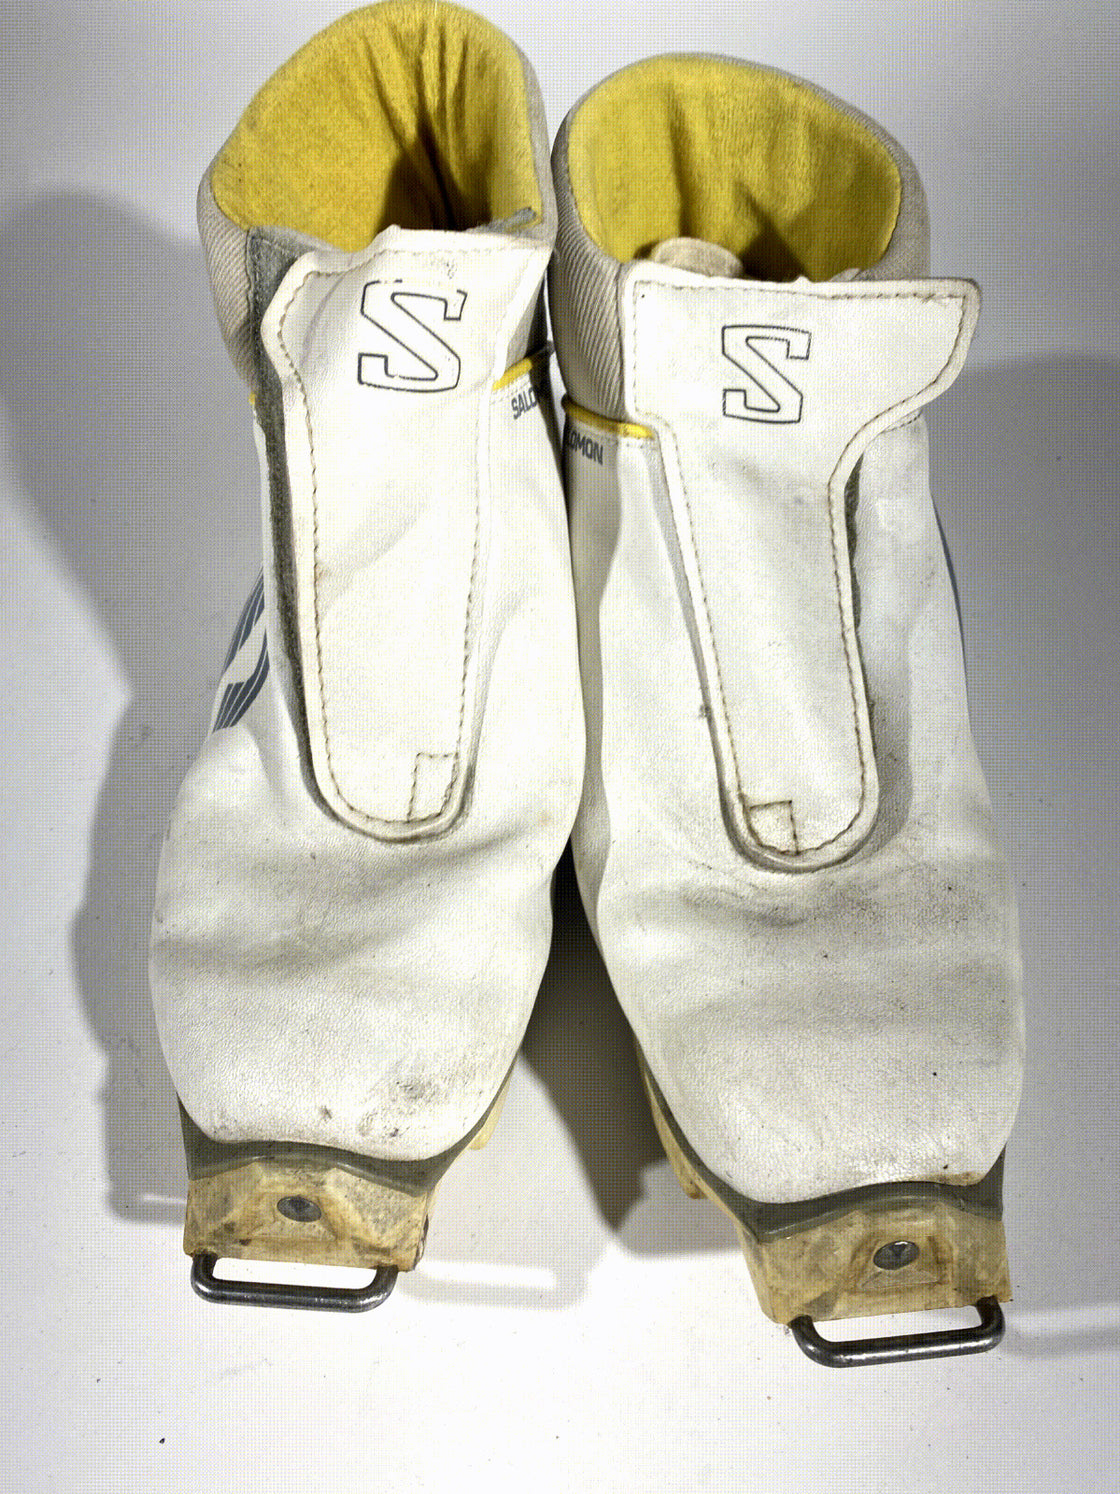 Salomon SR601 Nordic Cross Country Ski Boots Size EU39 US7 for SNS Old Bindings